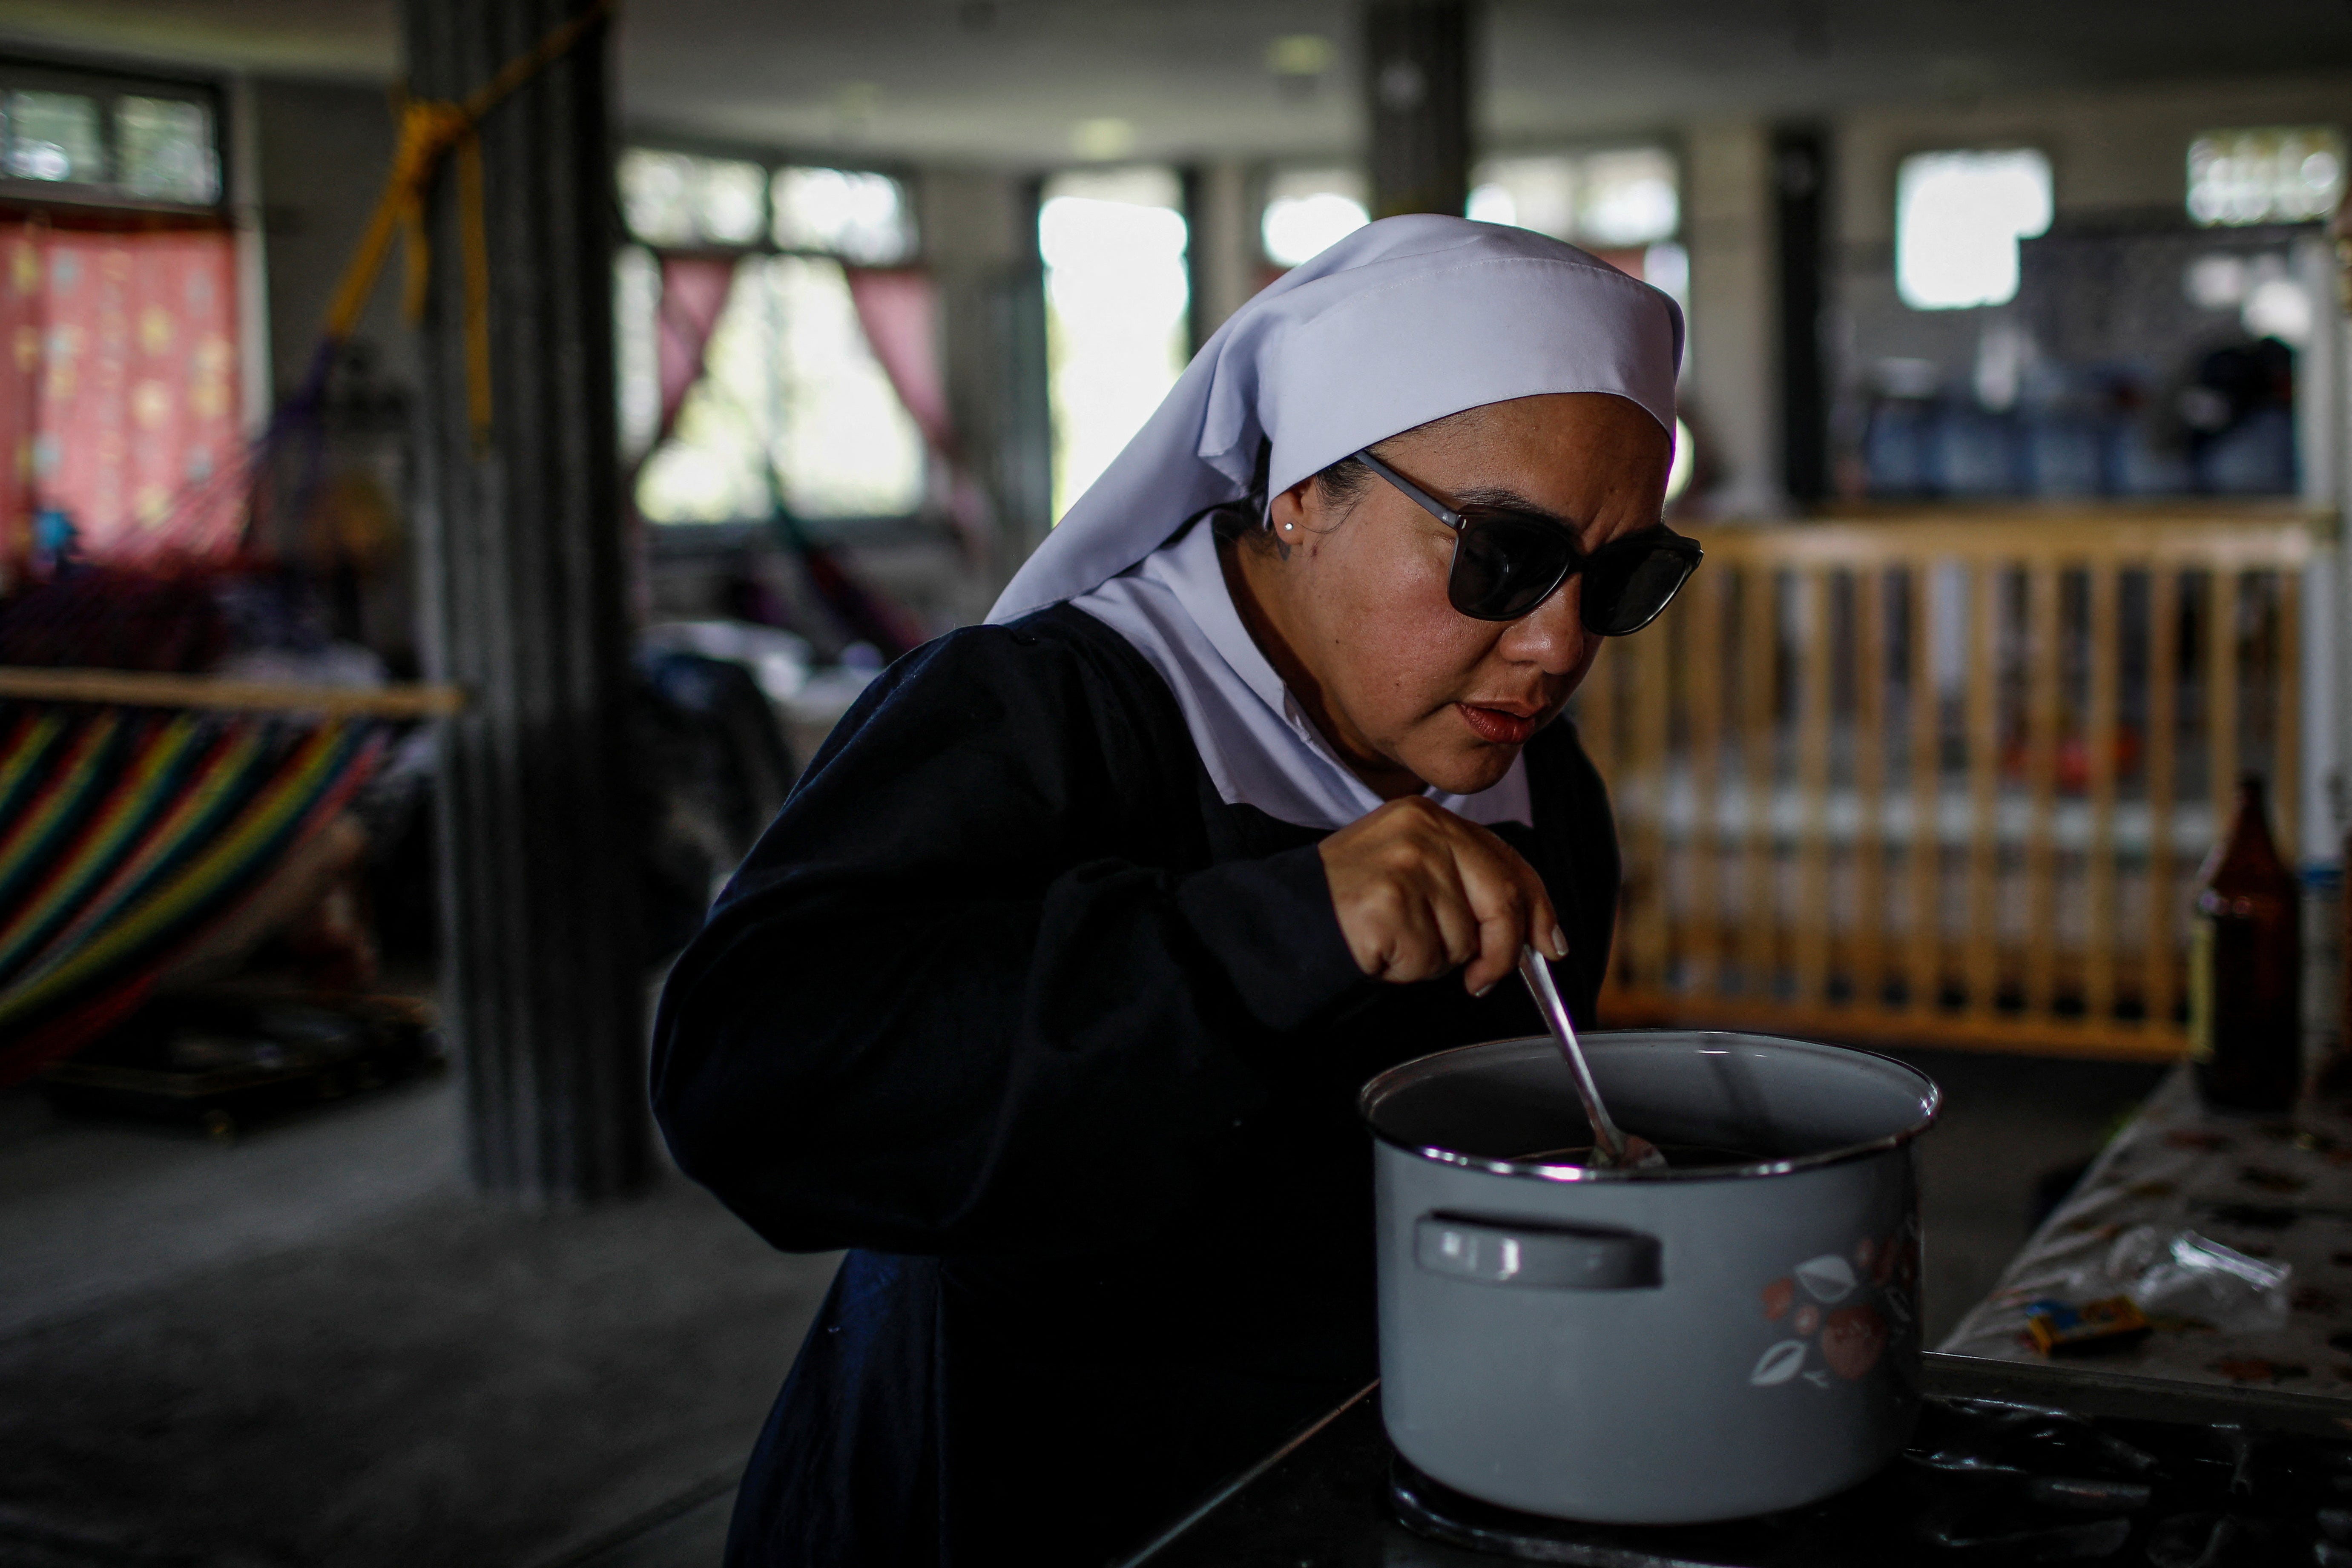 Sister Bernadet prepares the CBD cream